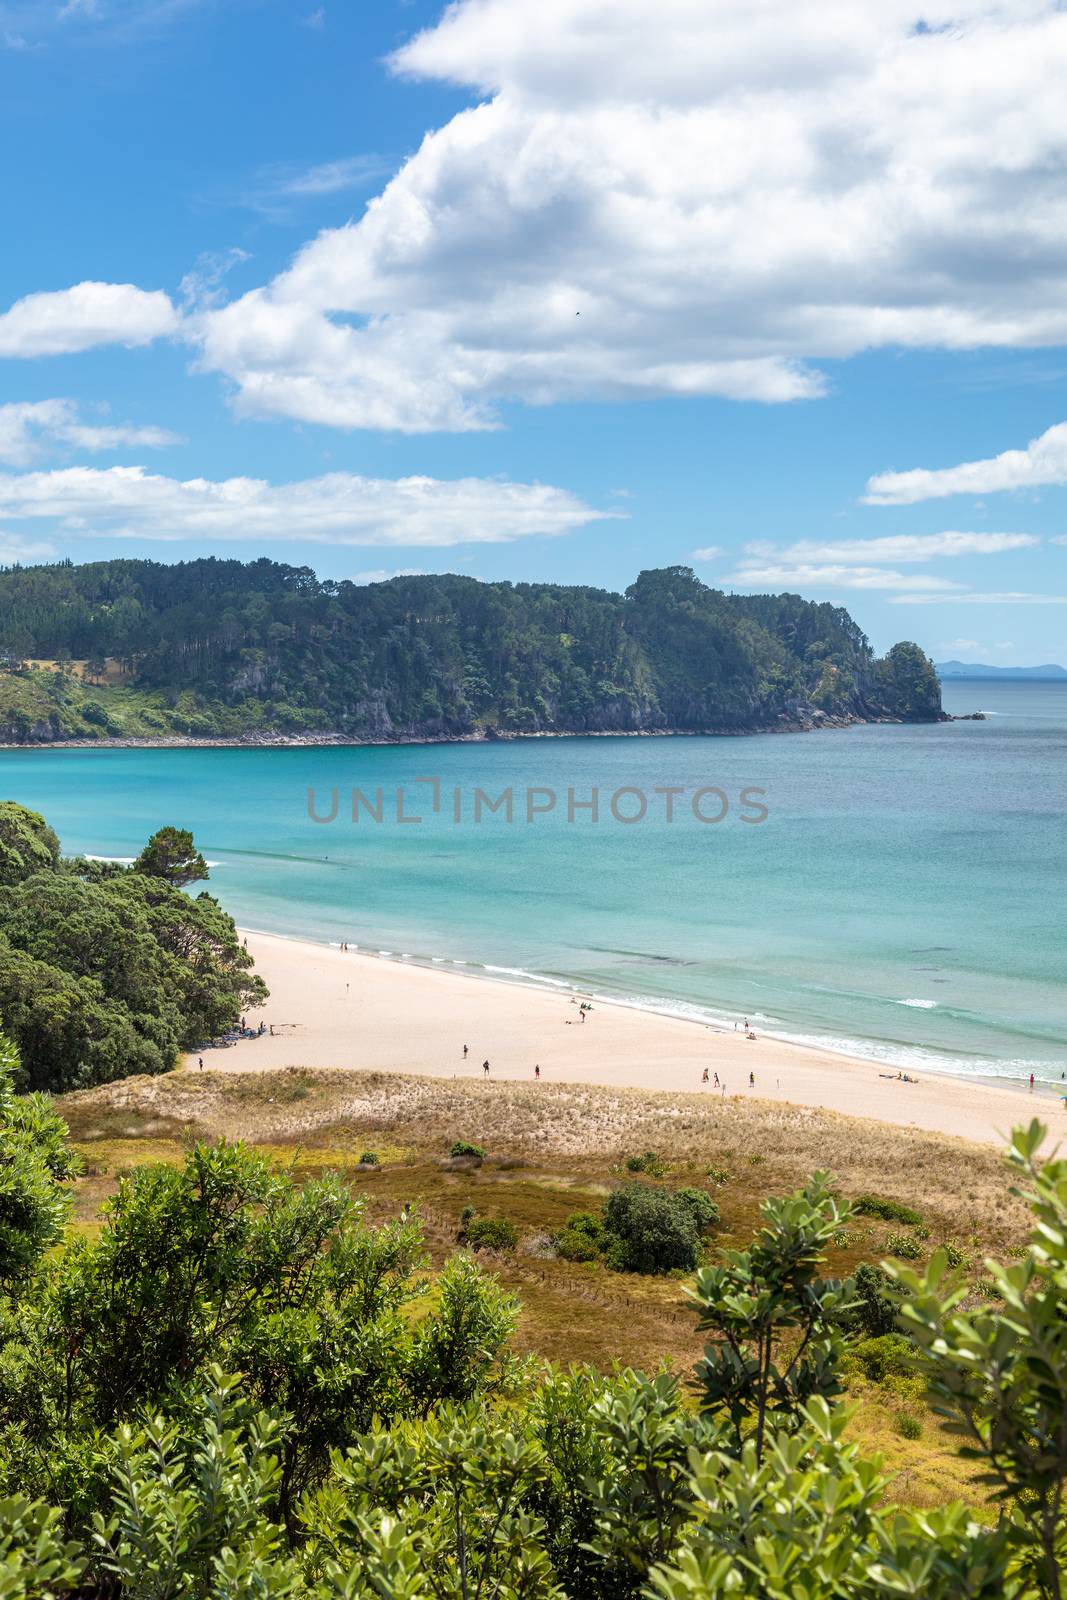 An image of the hot springs beach New Zealand Coromandel